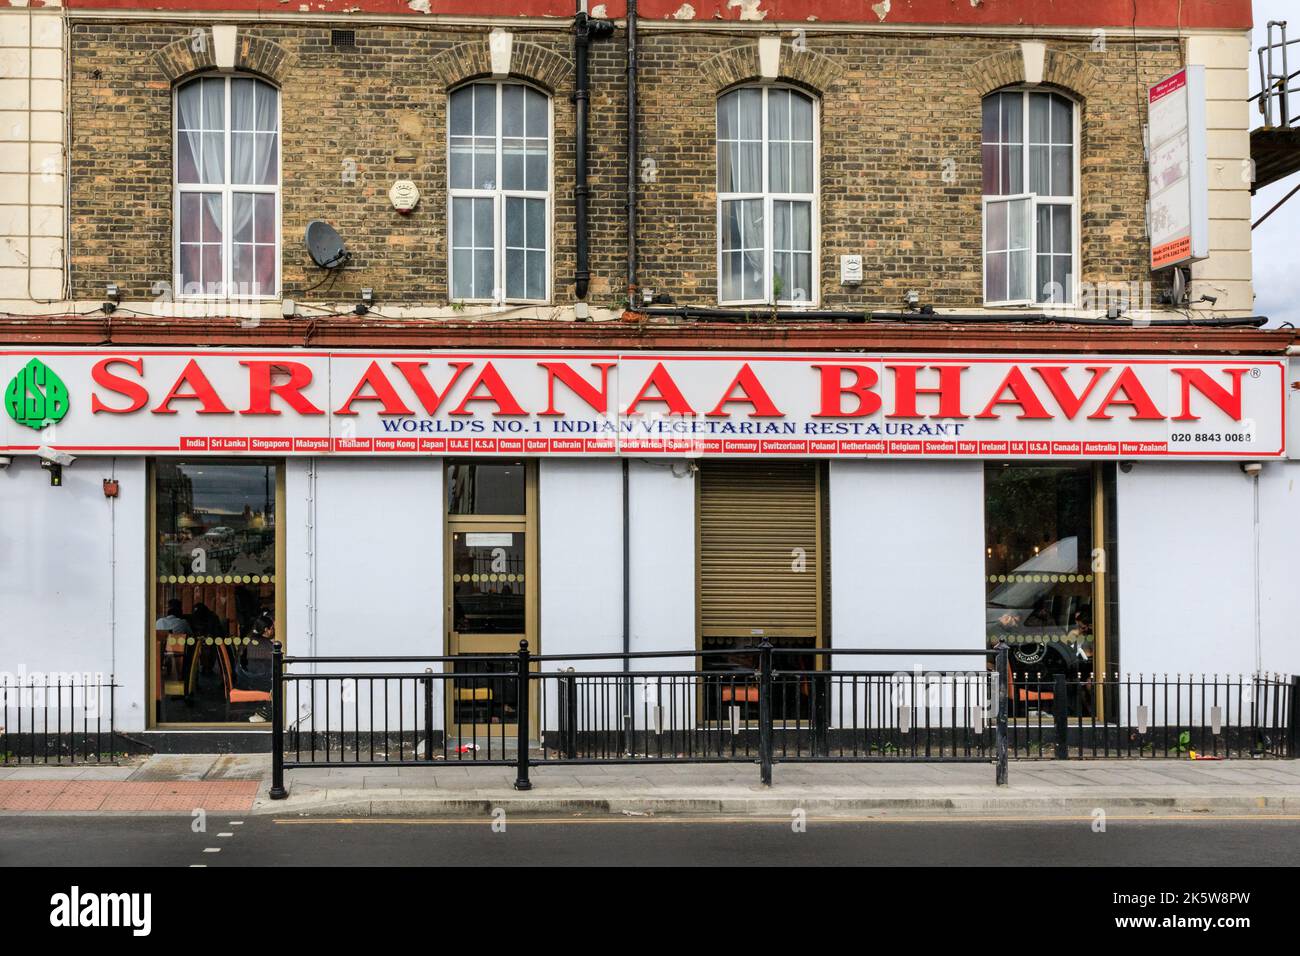 Saravanaa Bhavan, Indian Vegetarian Restaurant exterior, Southall, West London, England, UK Stock Photo